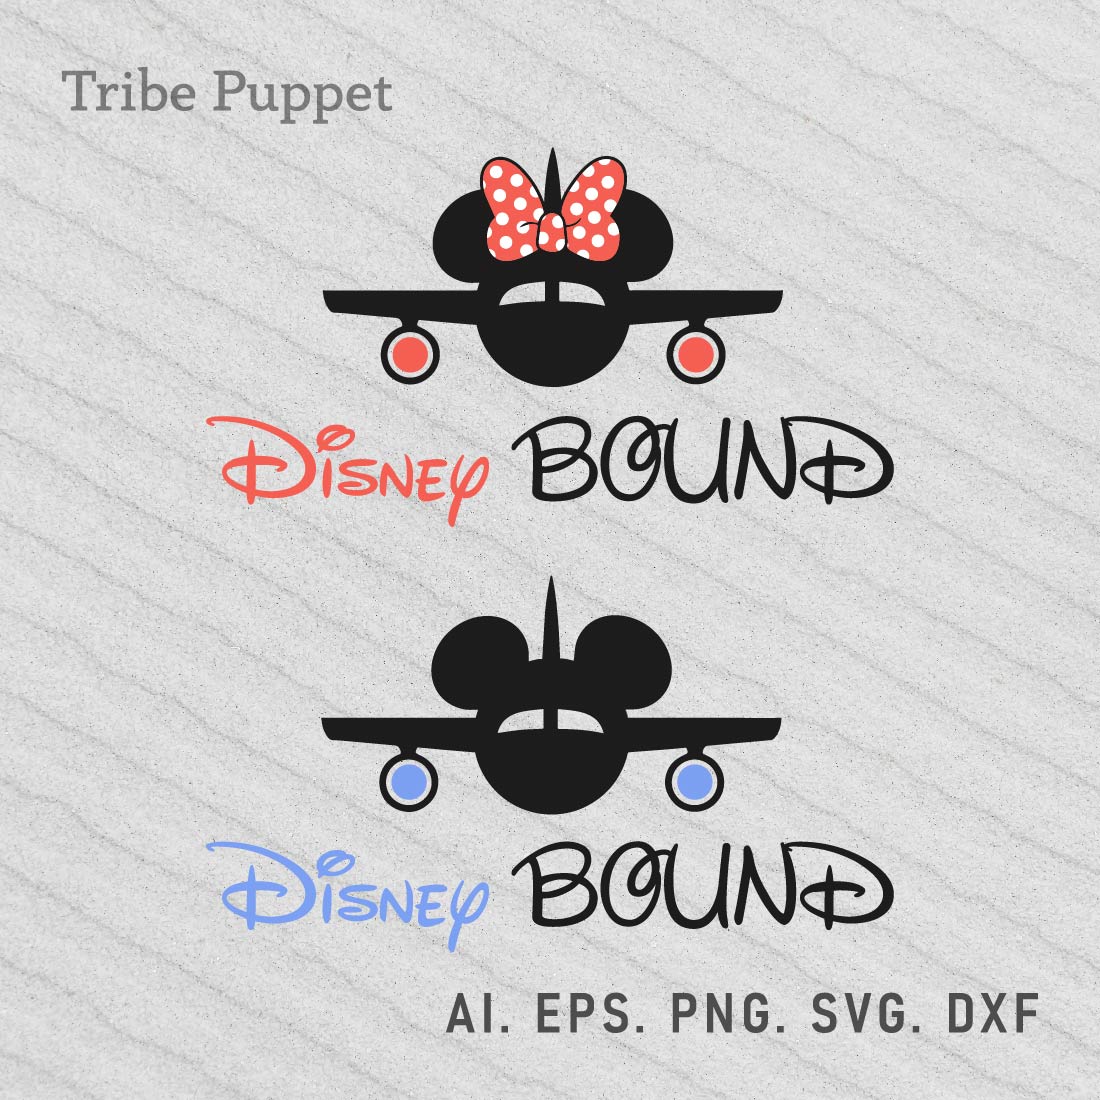 Disney Bound Minnie preview image.